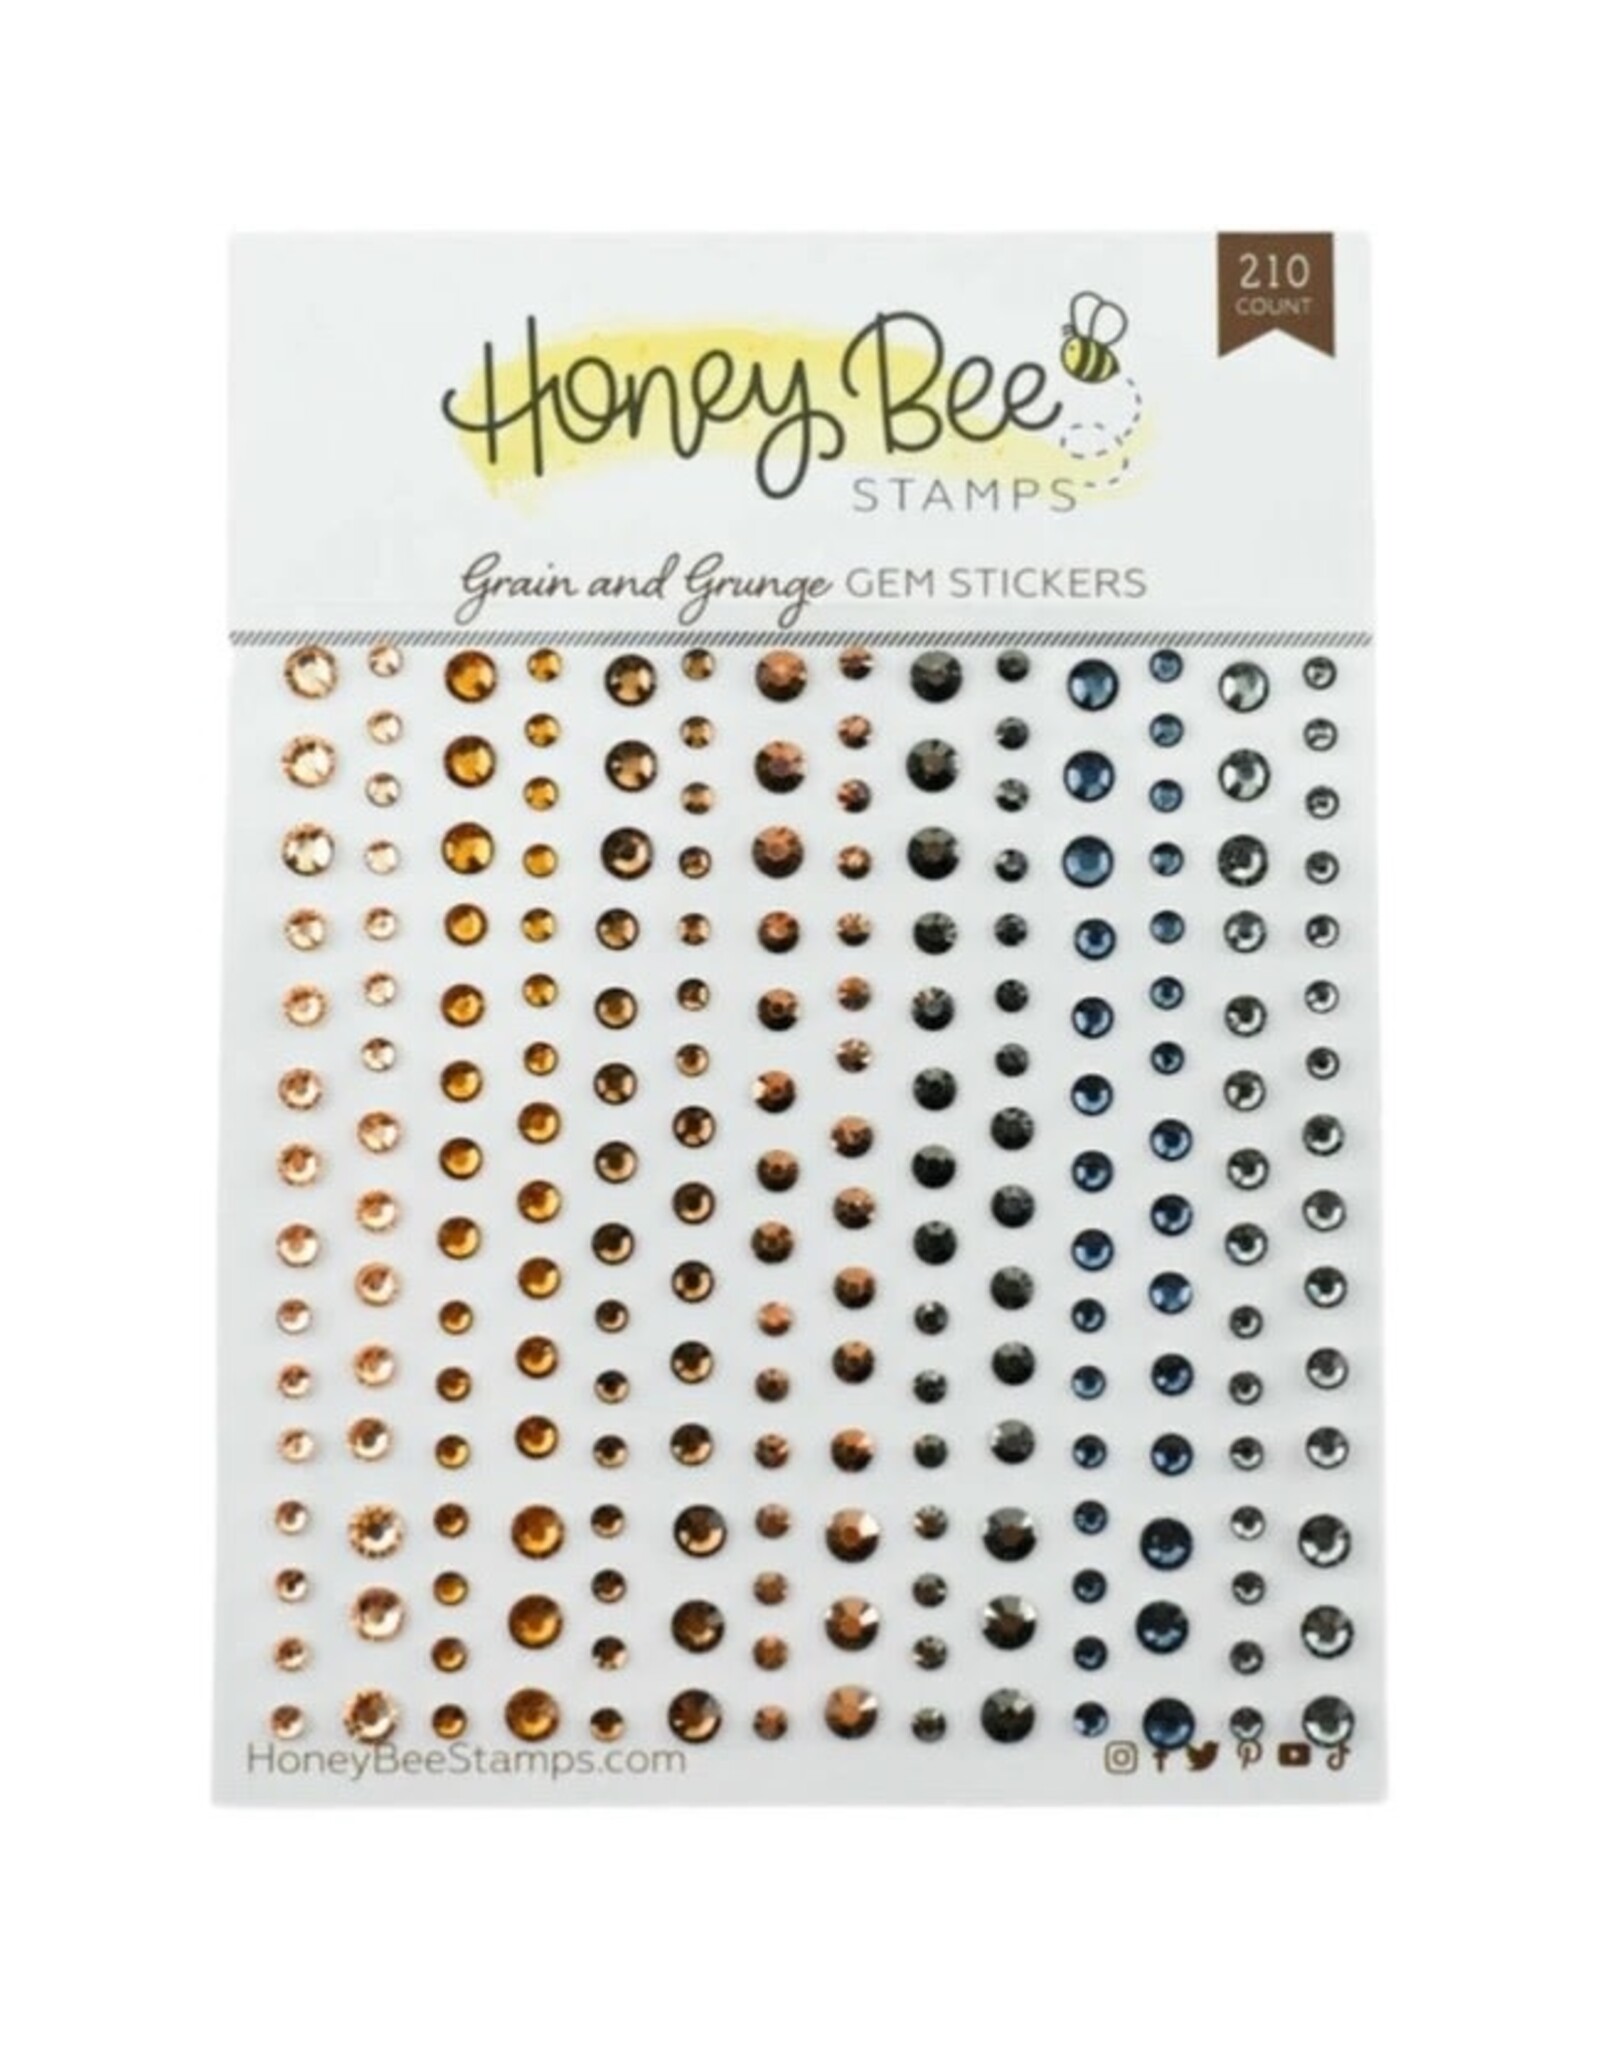 HONEY BEE HONEY BEE STAMPS GRAIN AND GRUNGE GEM STICKERS